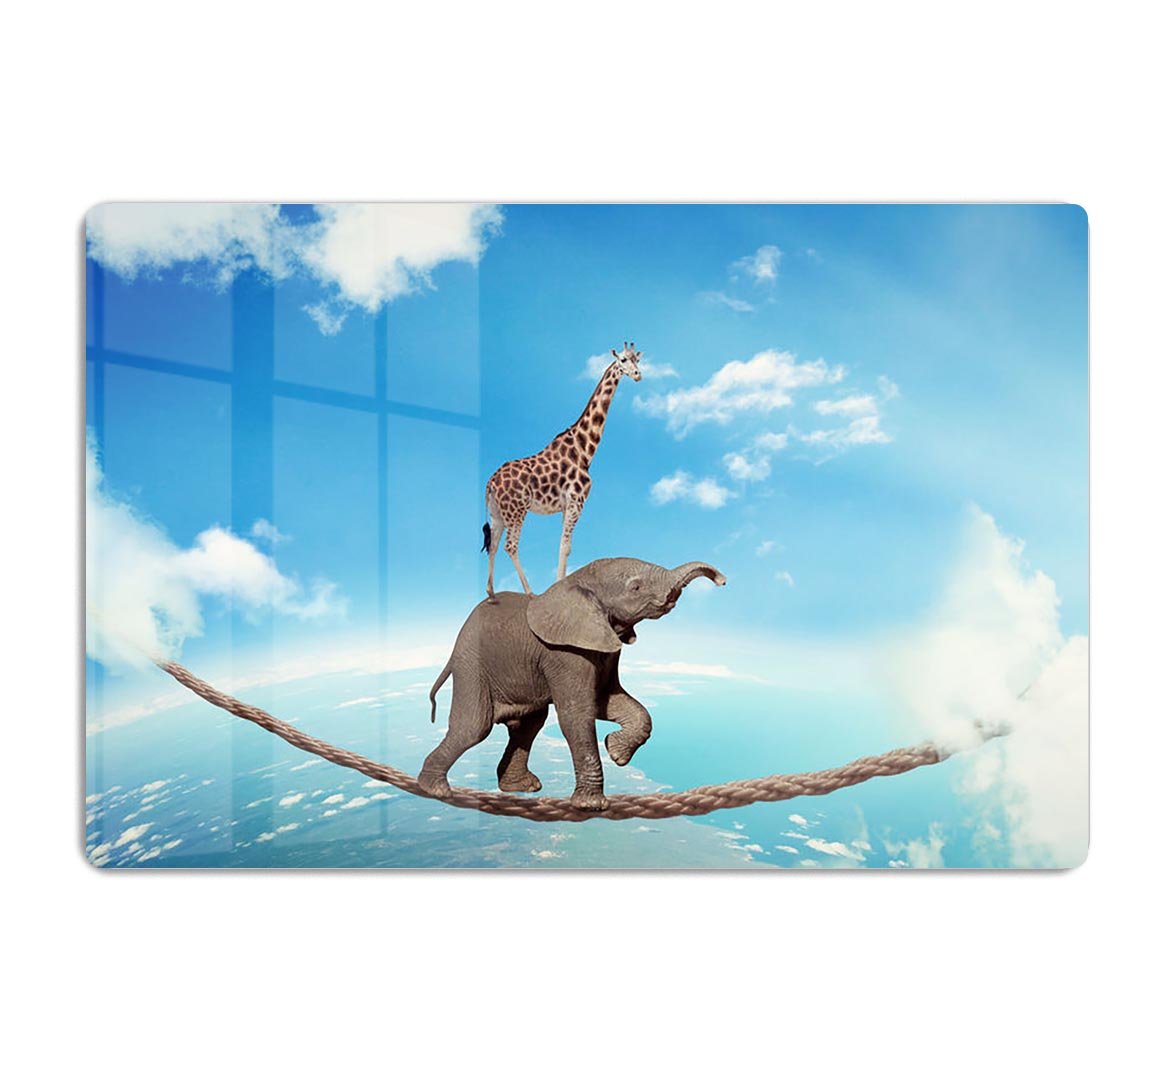 Elephant with giraffe walking on dangerous rope high in sky HD Metal Print - Canvas Art Rocks - 1